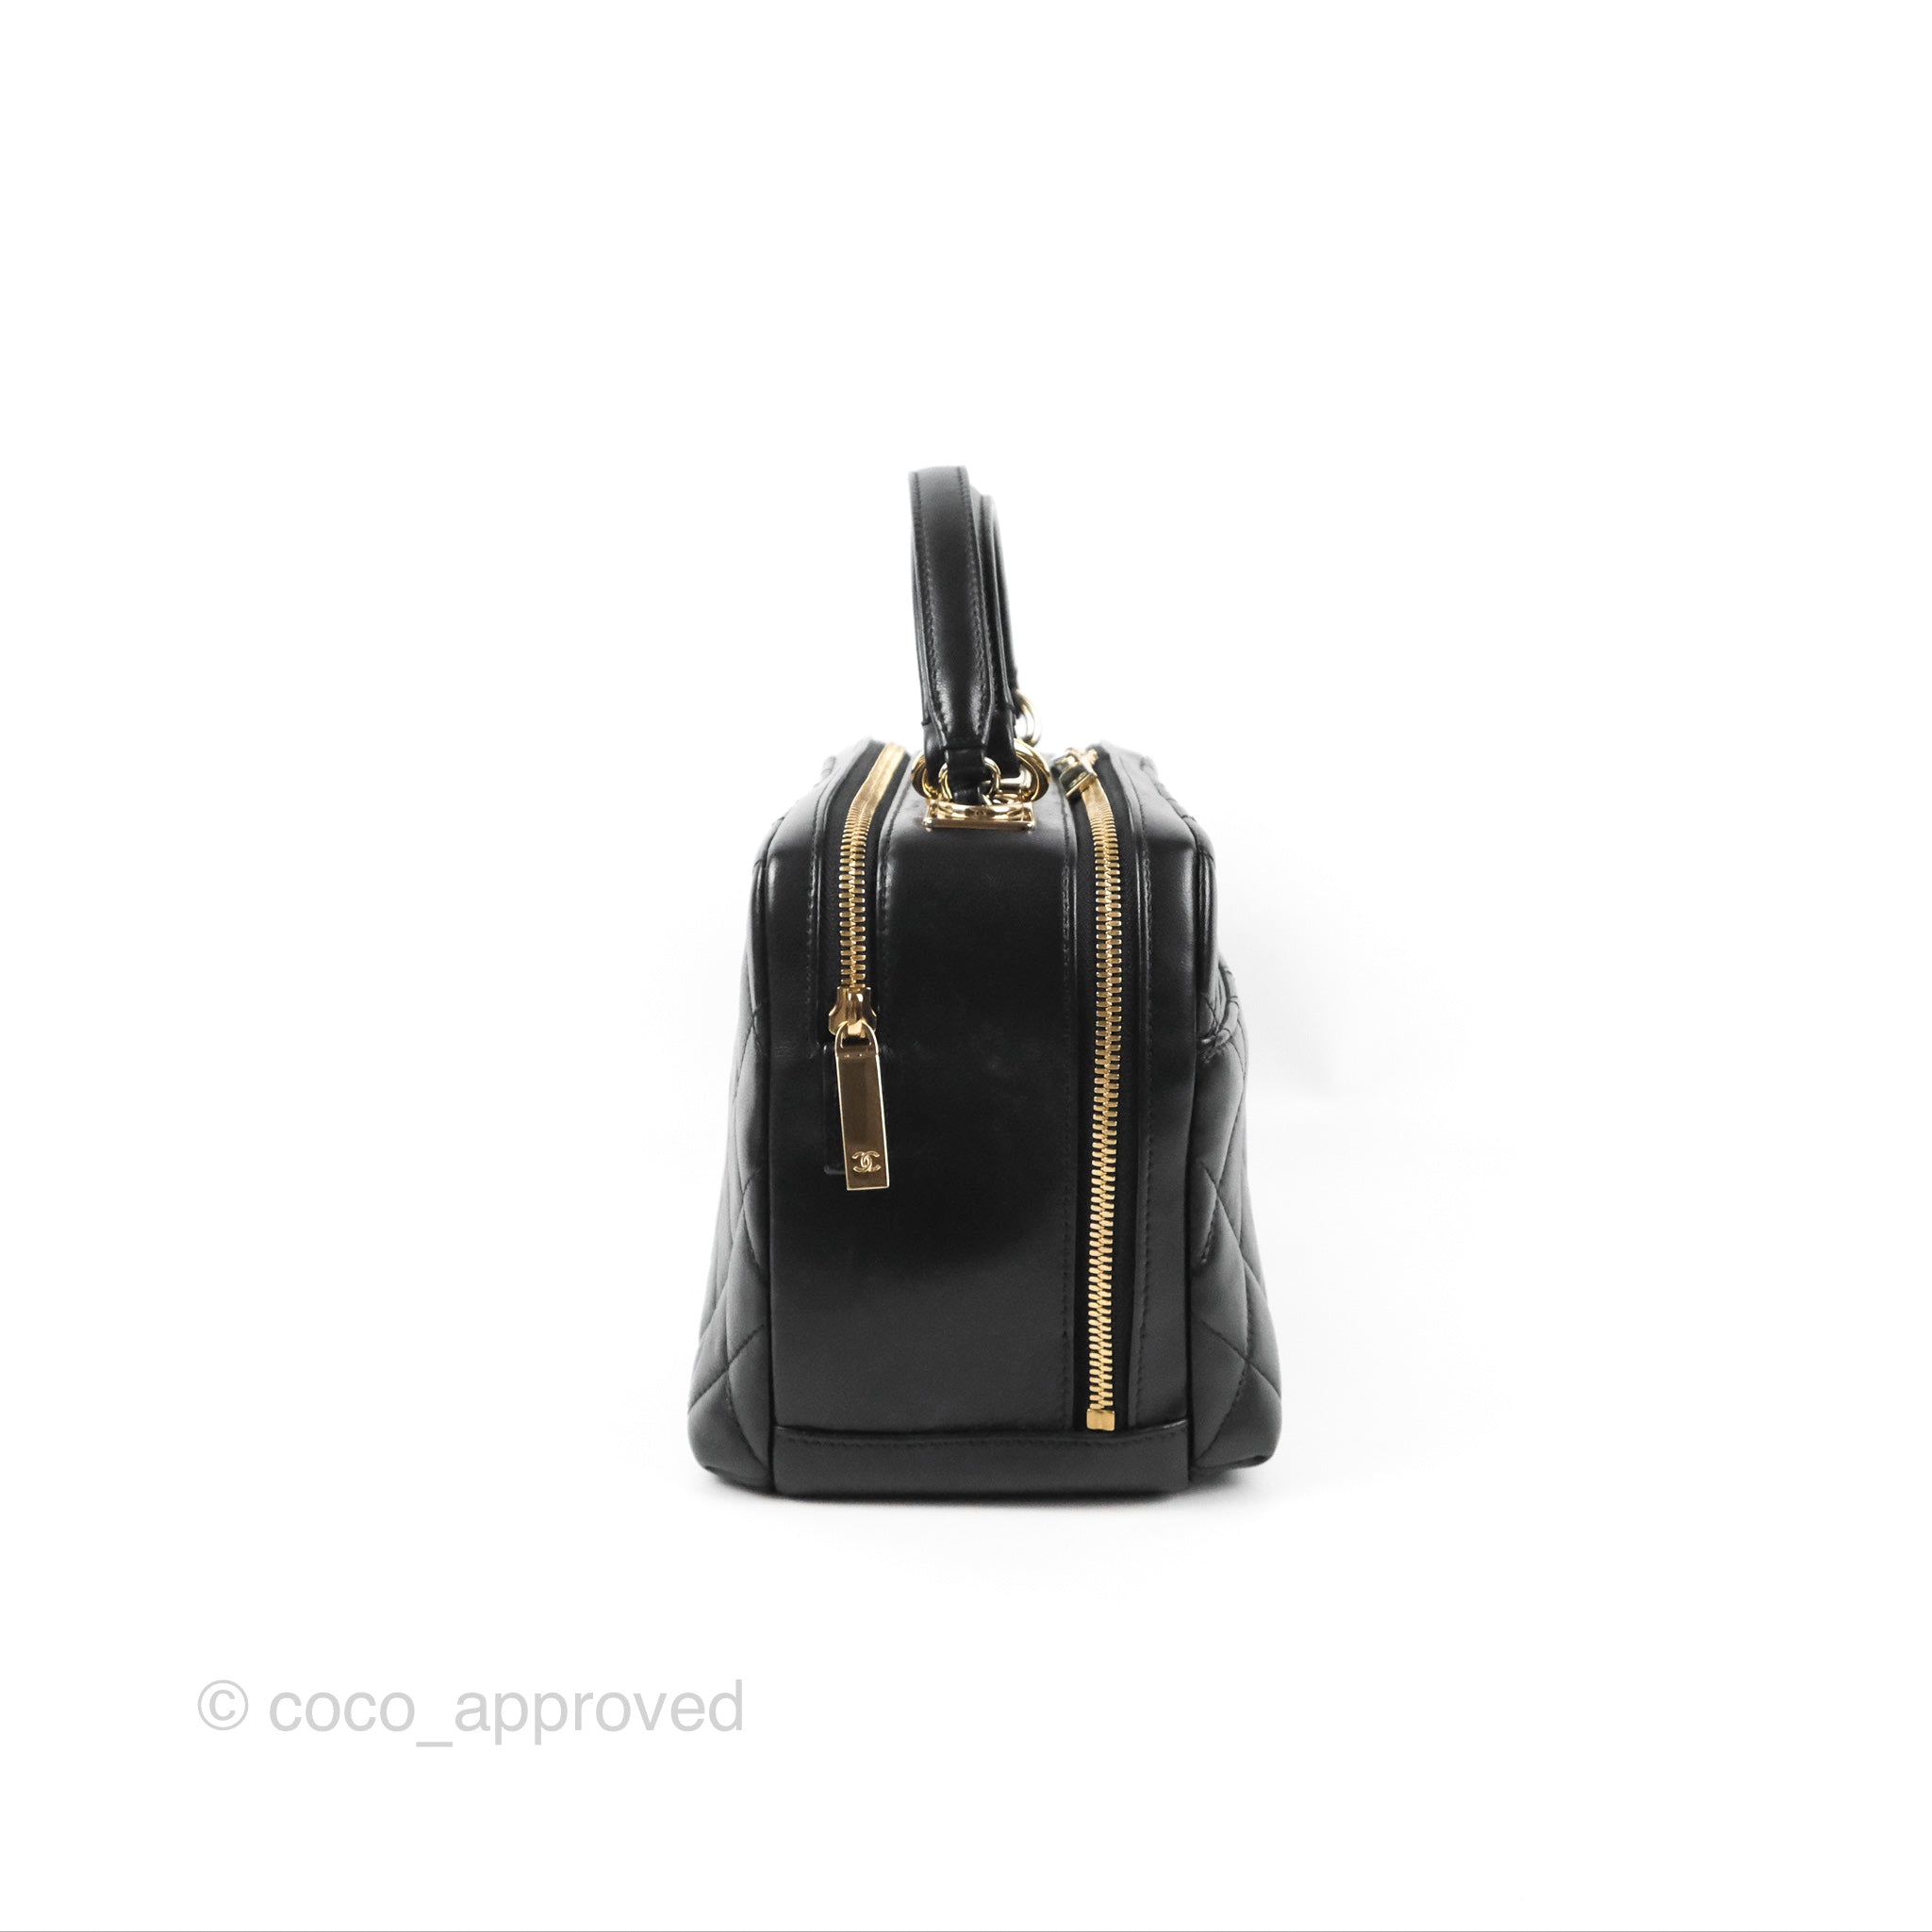 Chanel New Mini Bowling Bag Sheepskin In Black - Praise To Heaven